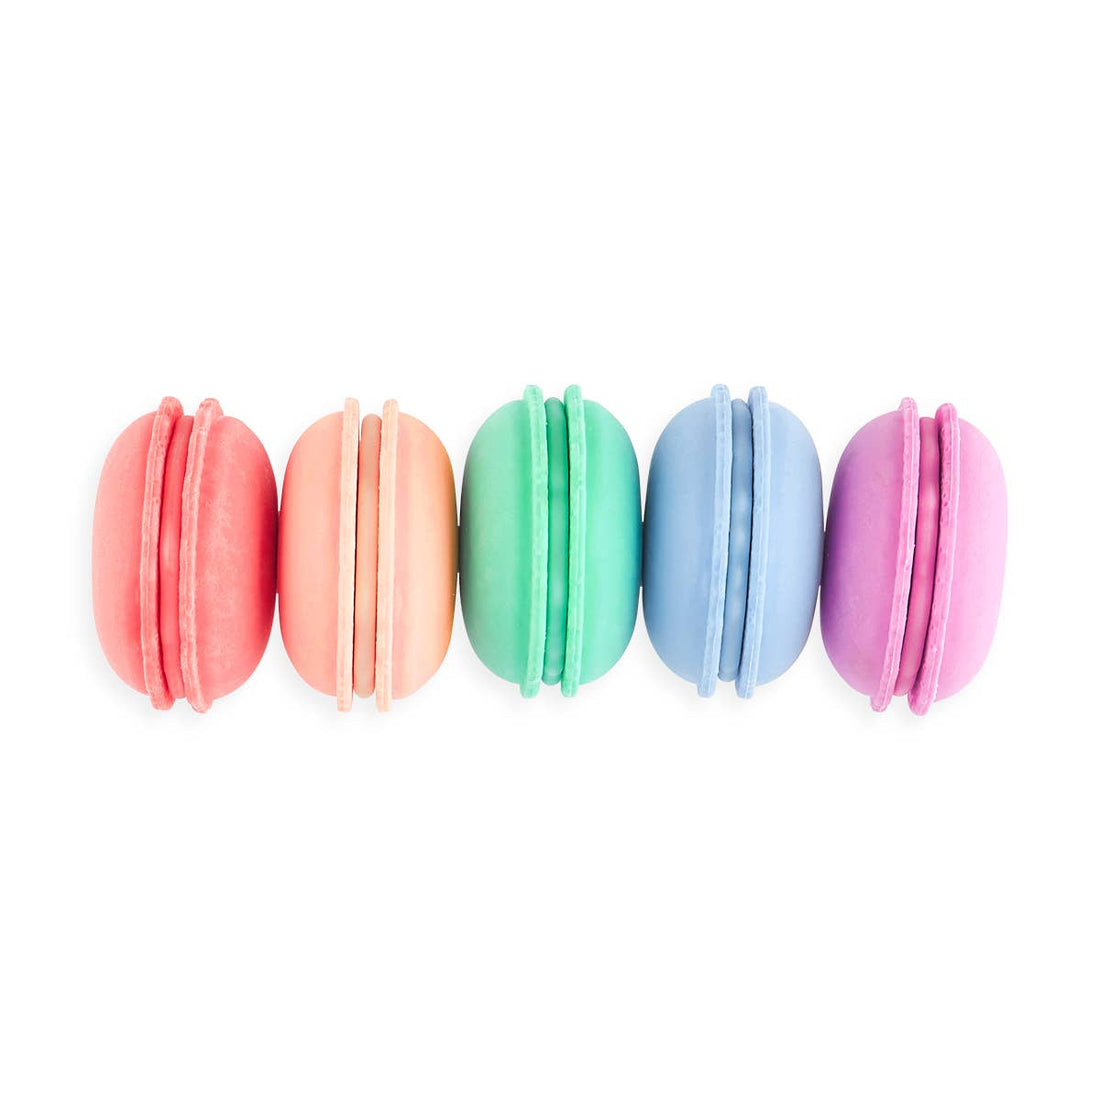 Le Macaron Patisserie Scented Eraser - Set of 5g